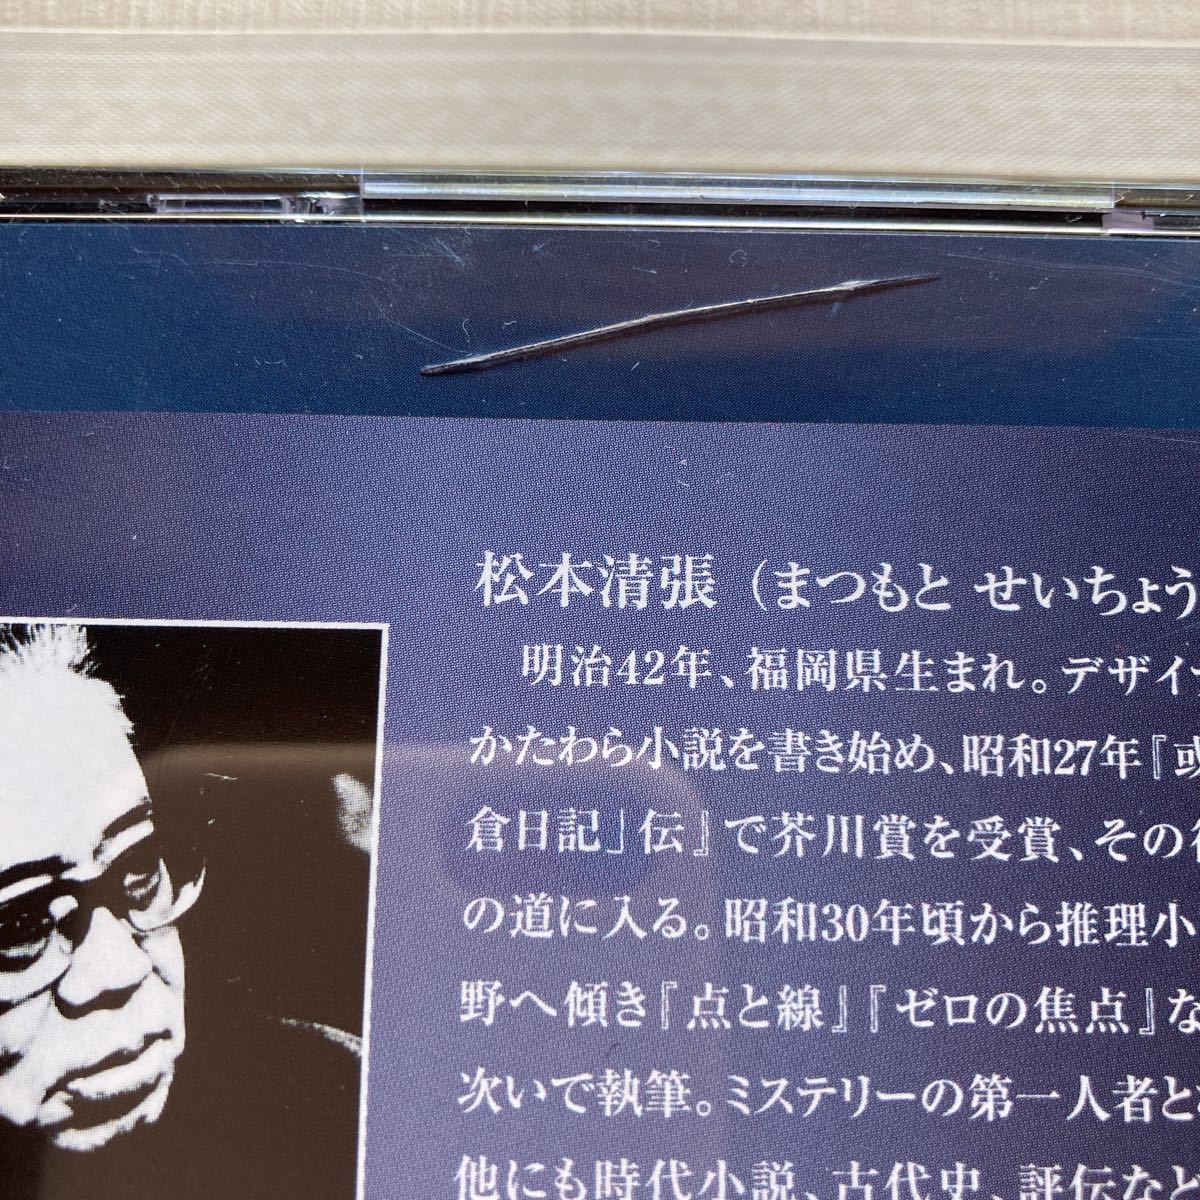 2CD Matsumoto Seicho love dog | tabi [. flower. decoration ].. reading aloud Yamazaki .* attaching : Matsumoto Seicho lecture [ novel. taking material ].. excerpt (16 minute )